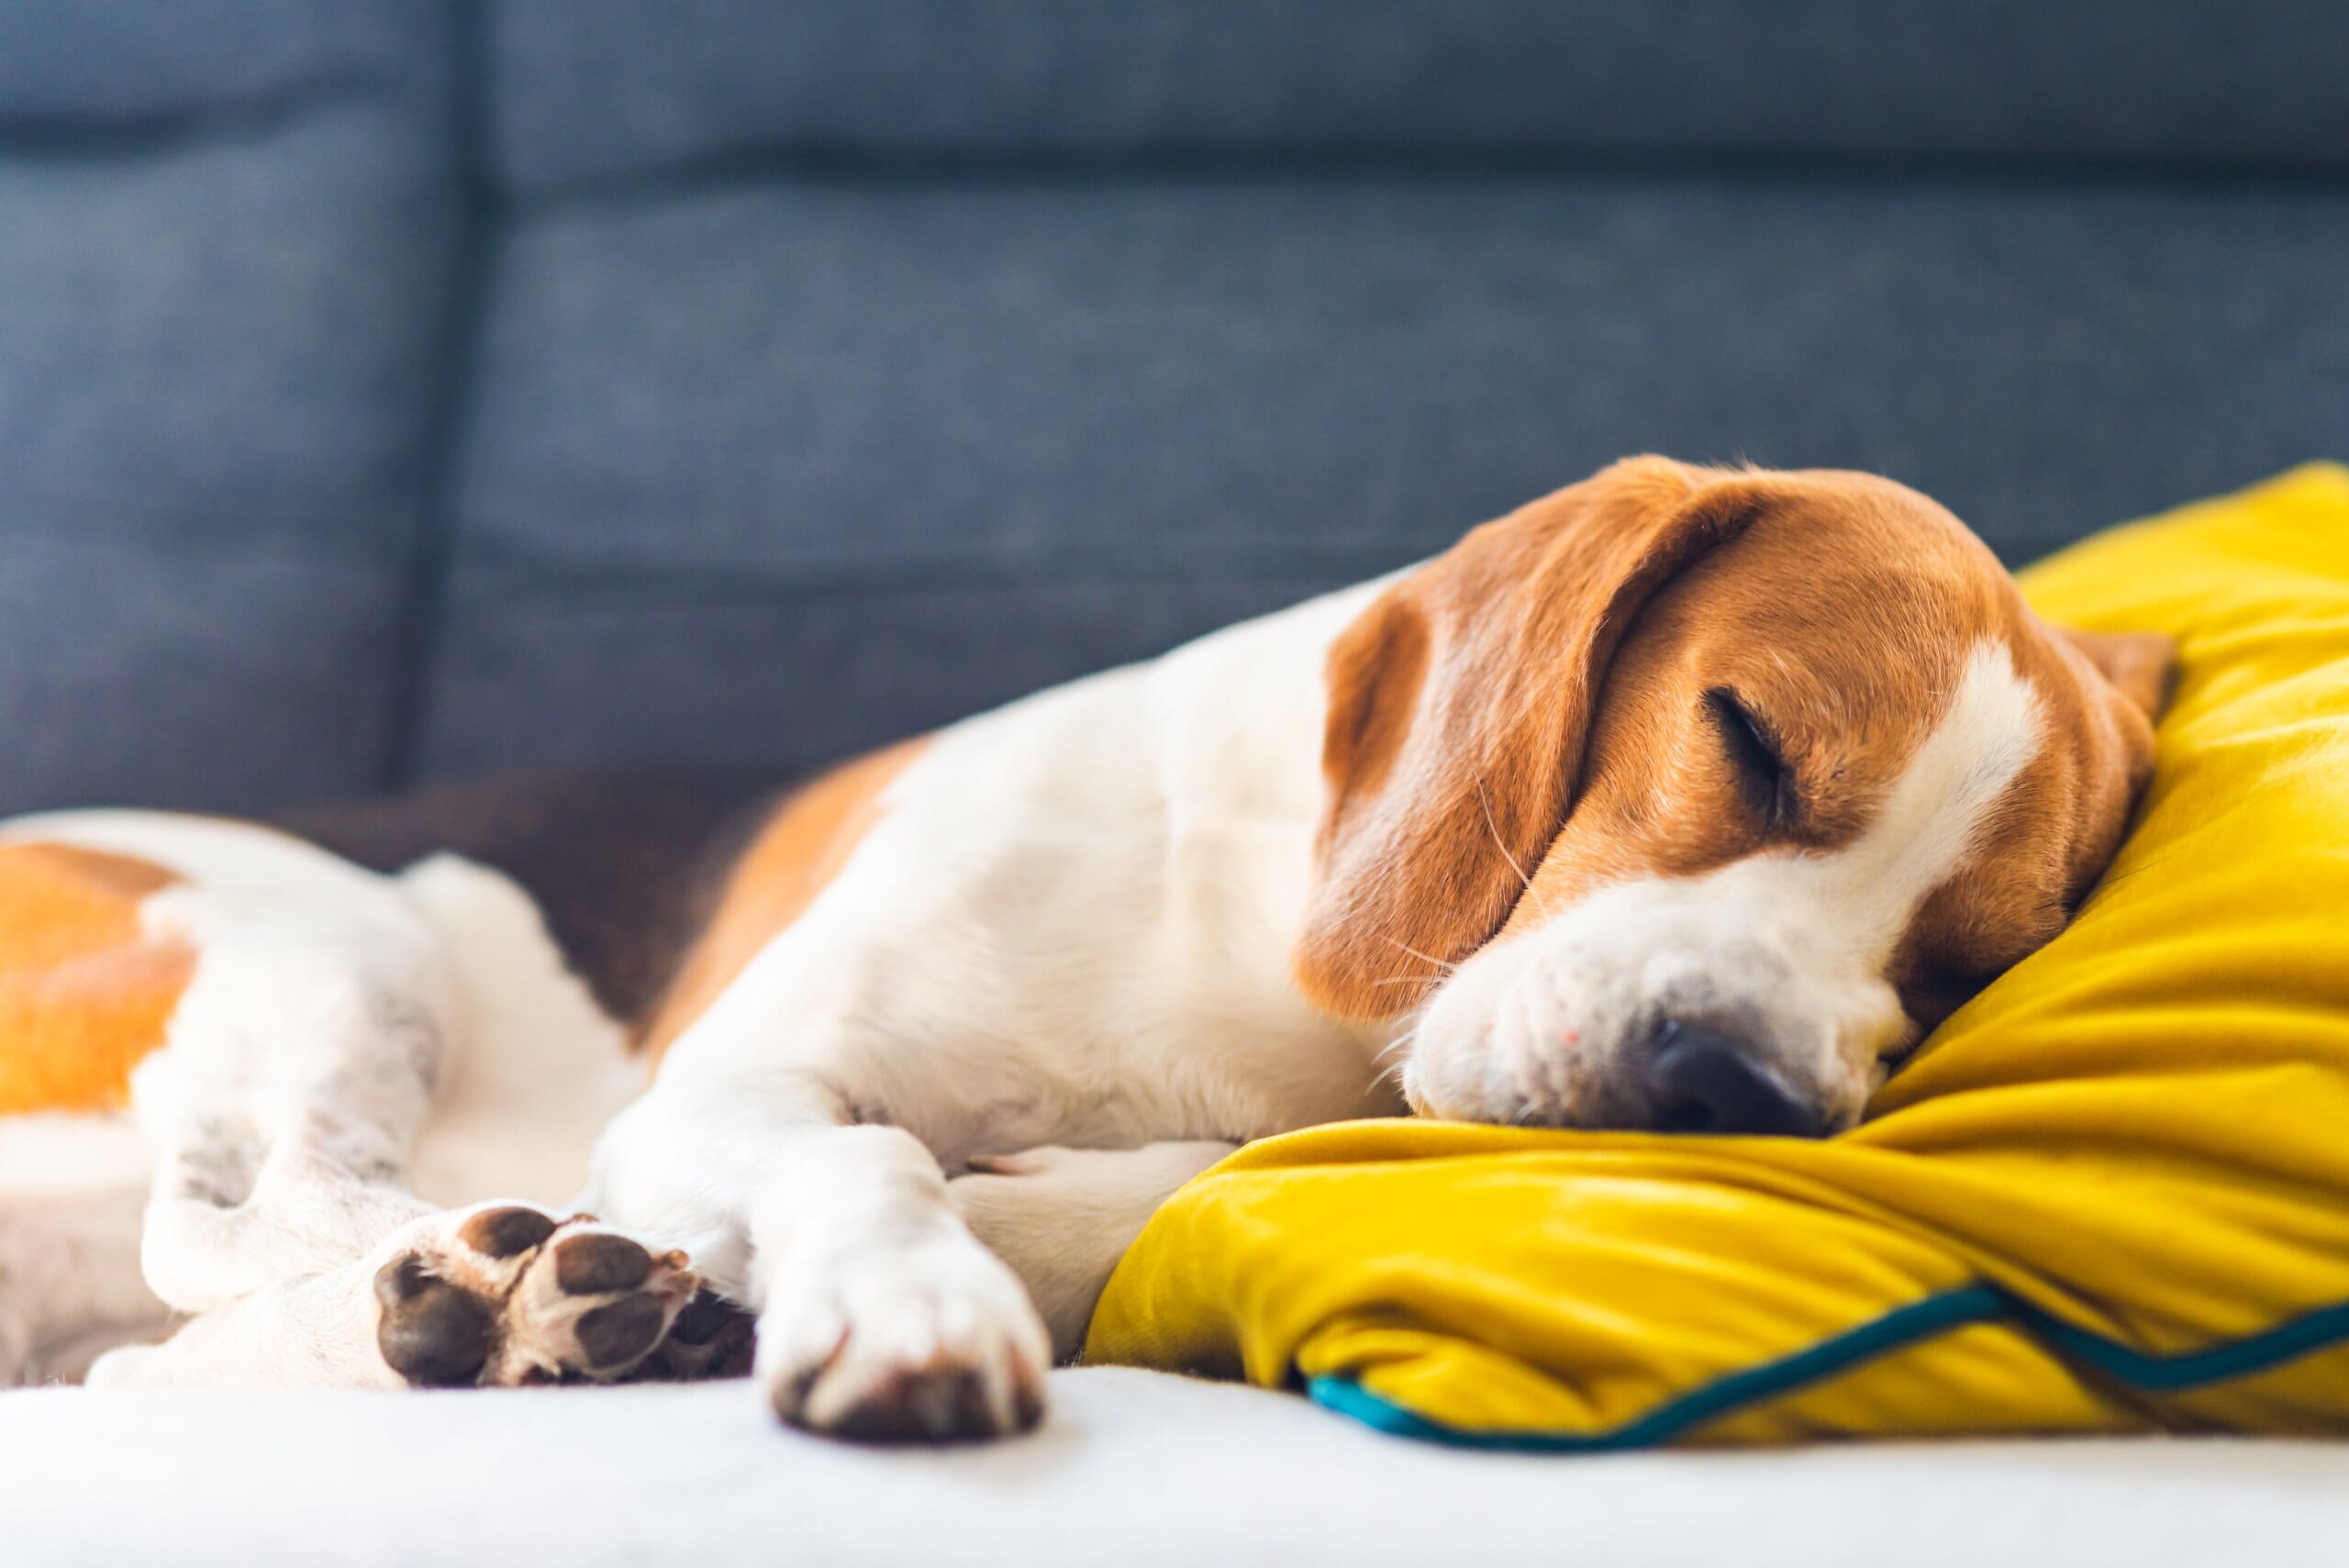 Tired Beagle dog alseep on a sofa with head on pillow.